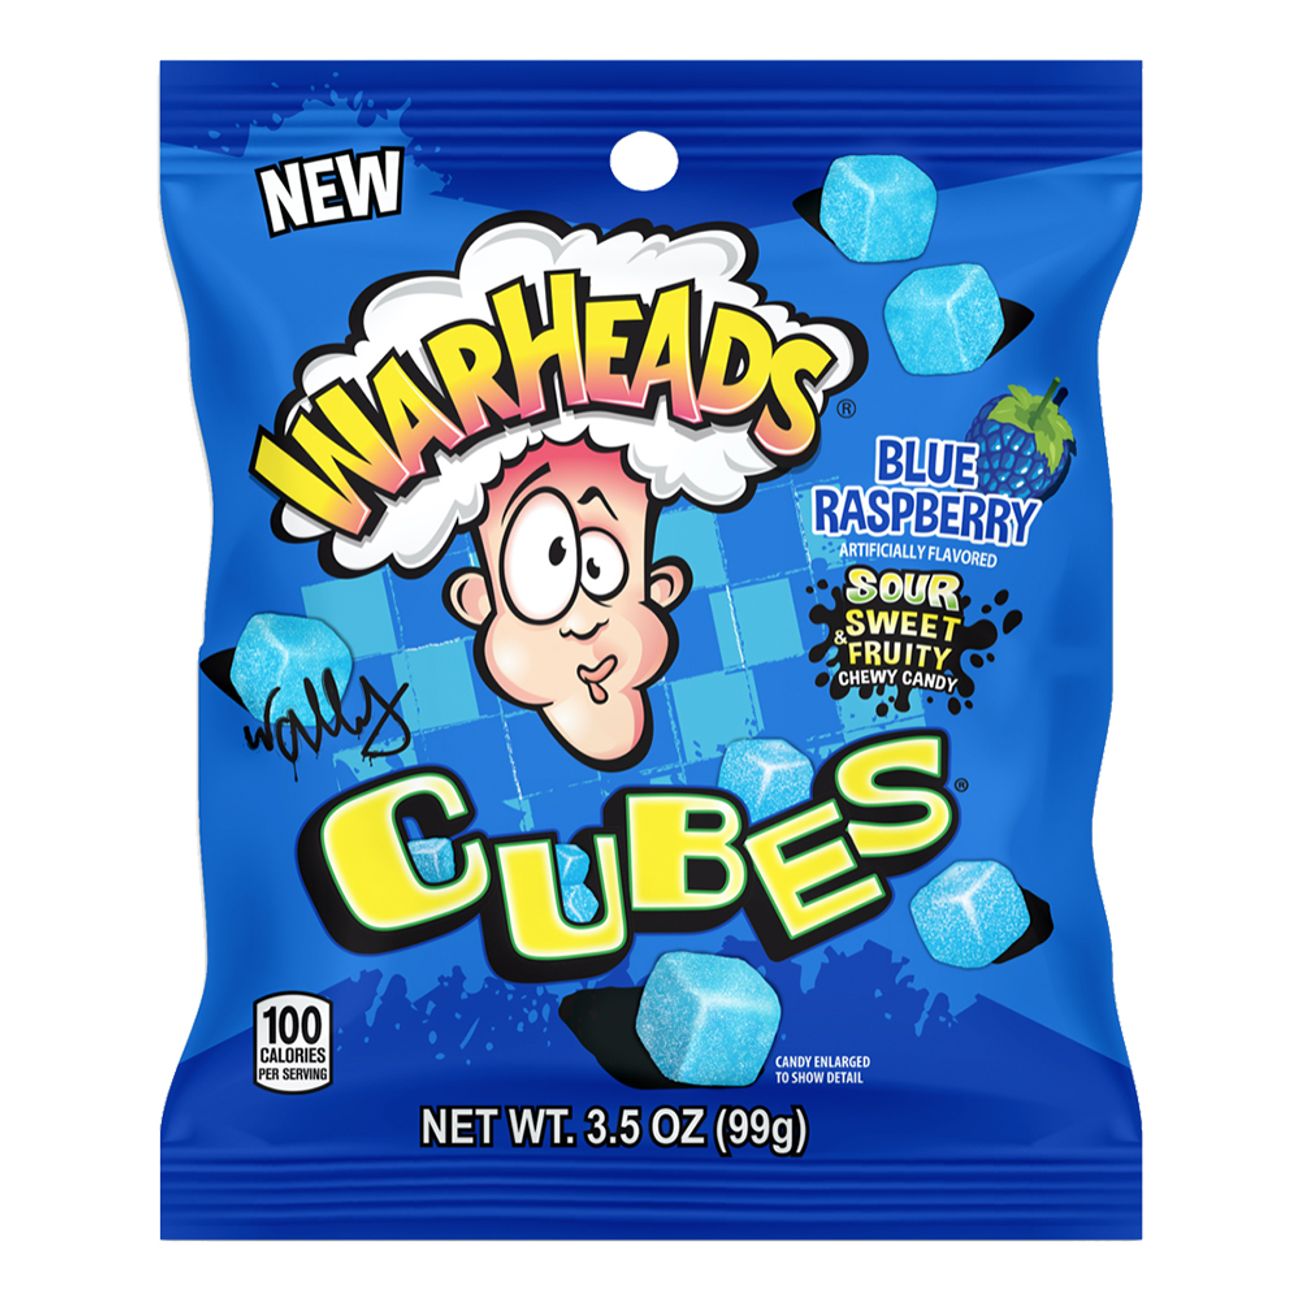 warheads-blue-raspberry-cubes-101932-1